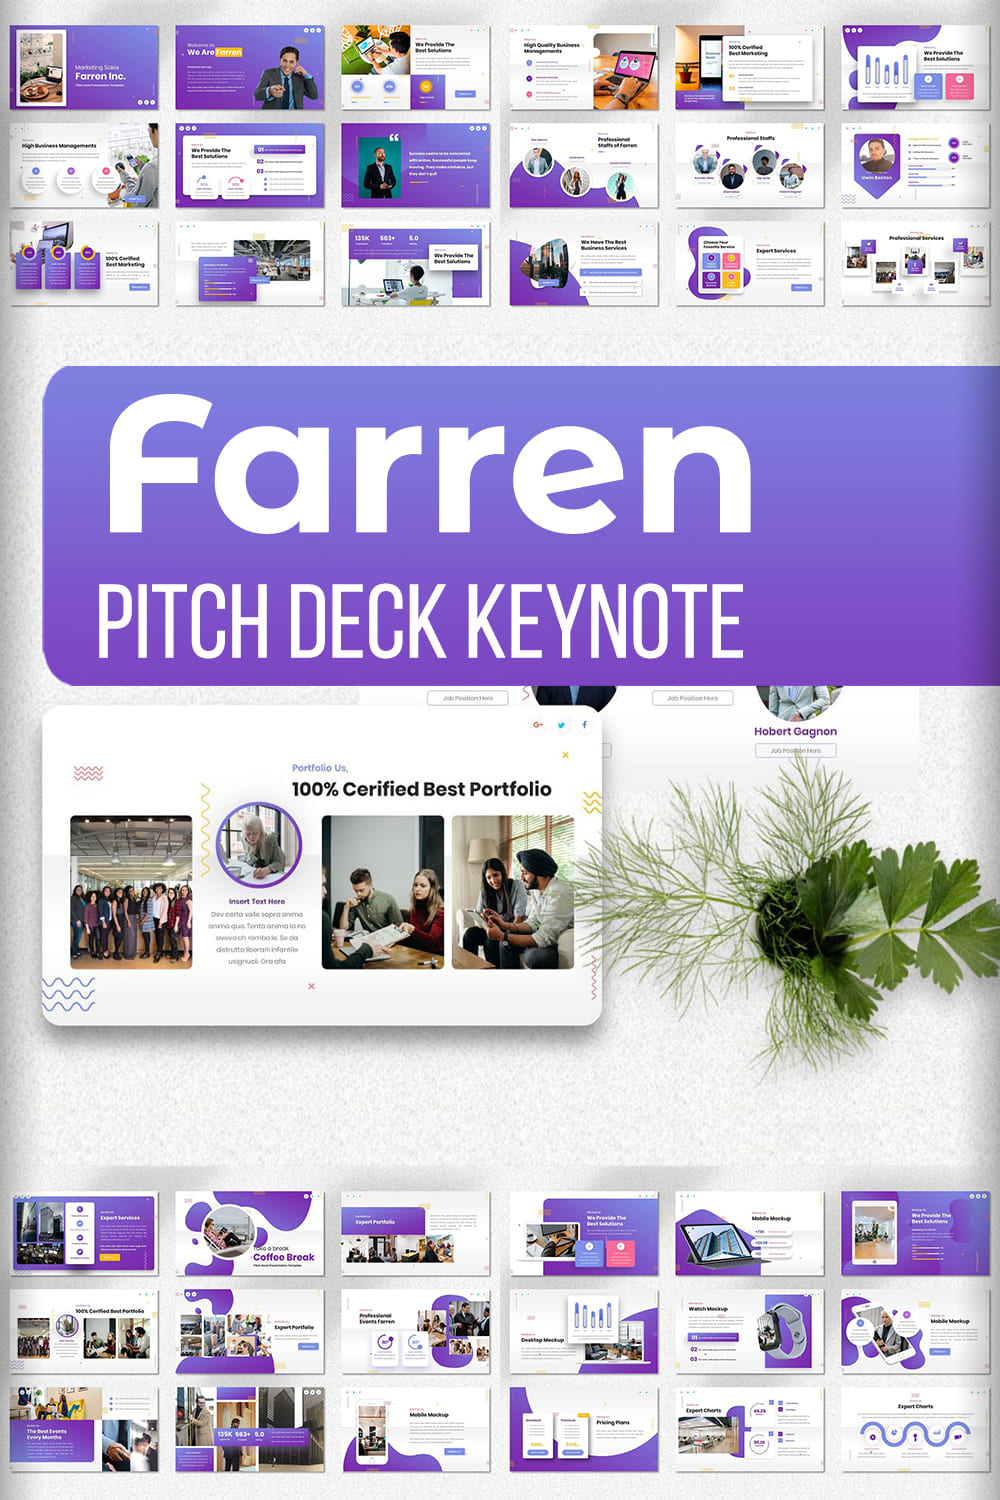 Pinterest - Farren - Pitch Deck Keynote.